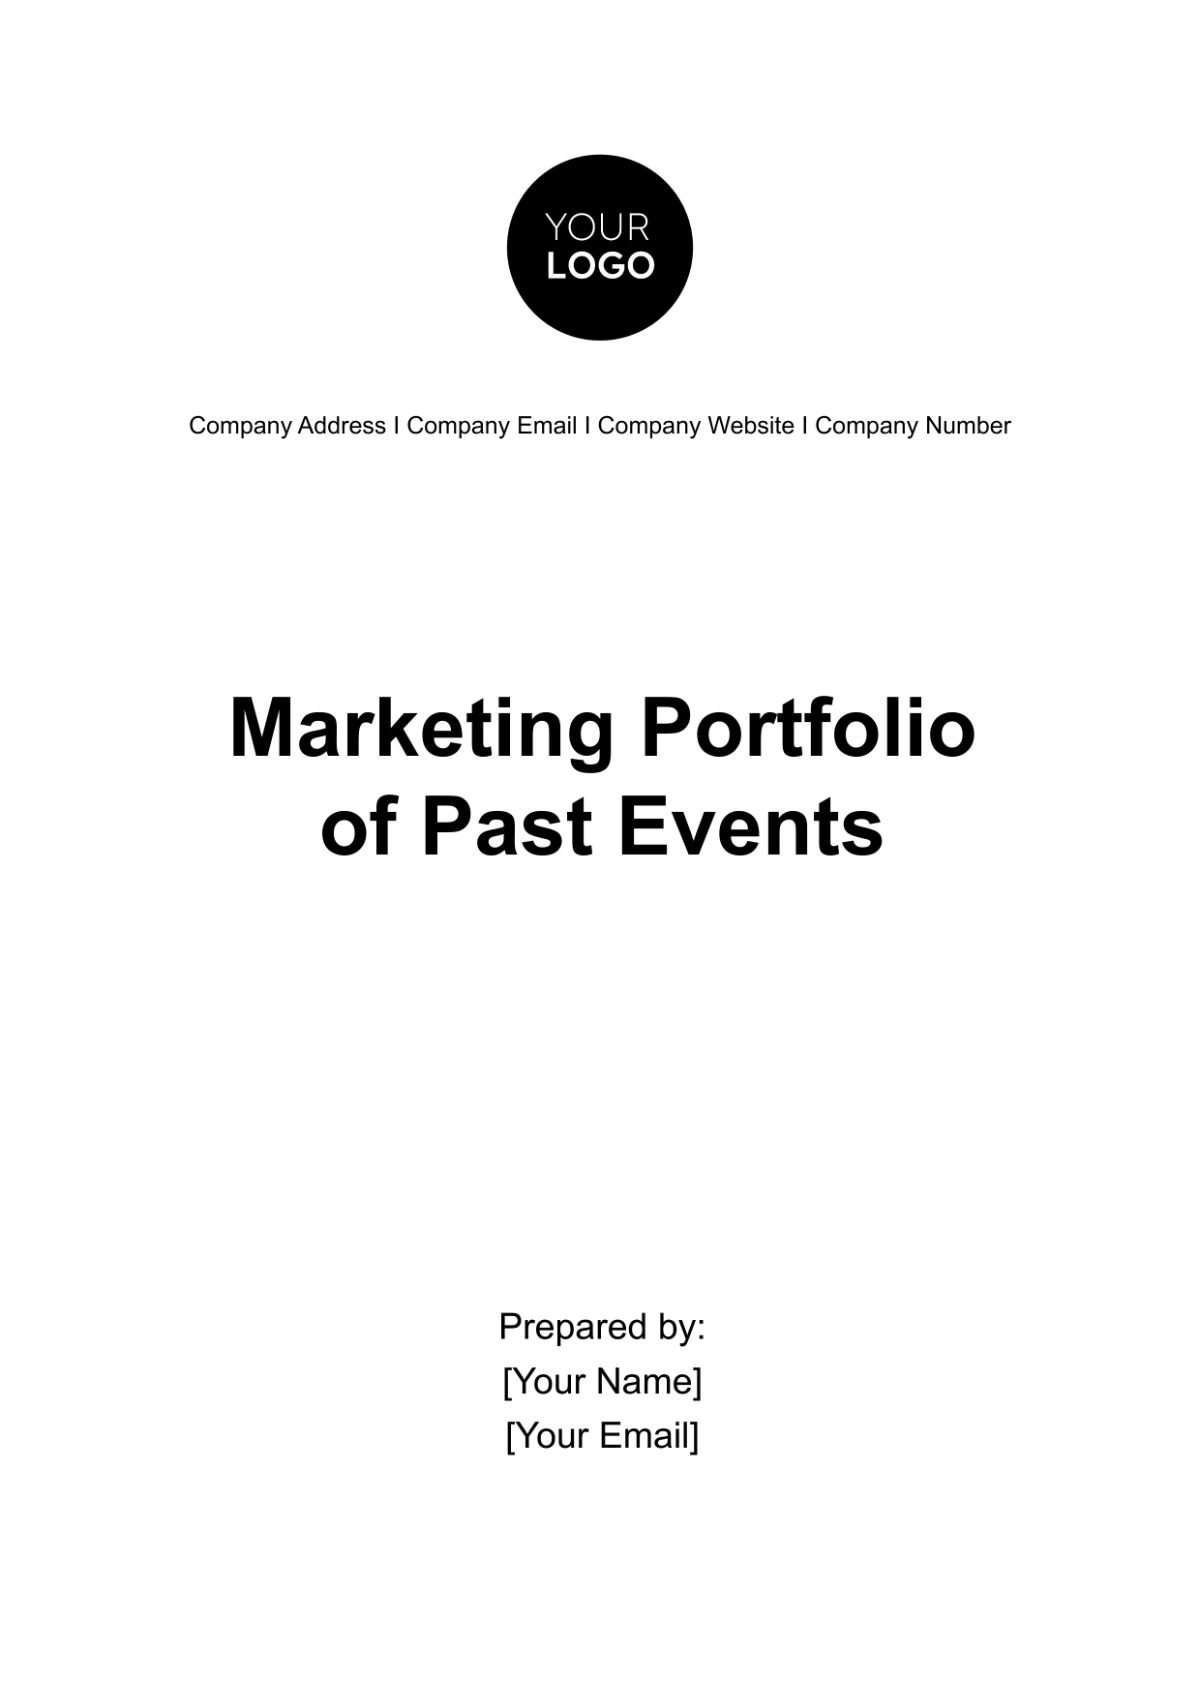 Free Marketing Portfolio of Past Events Template